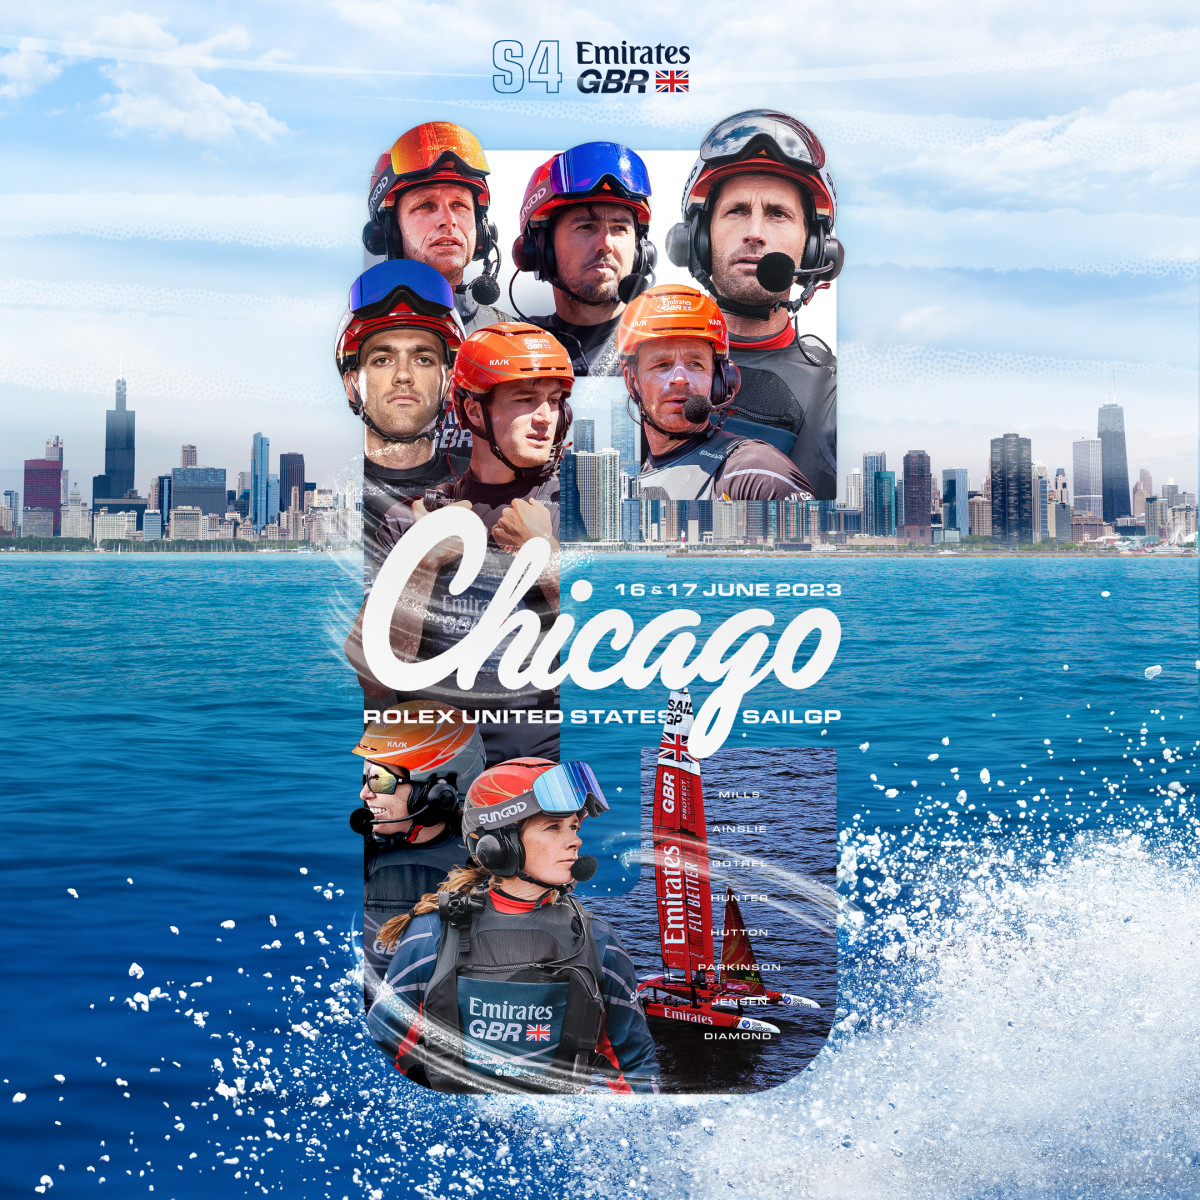 Rolex United States Sail Grand Prix | Chicago at Navy Pier | Season 4 | Emirates GBR | Asset